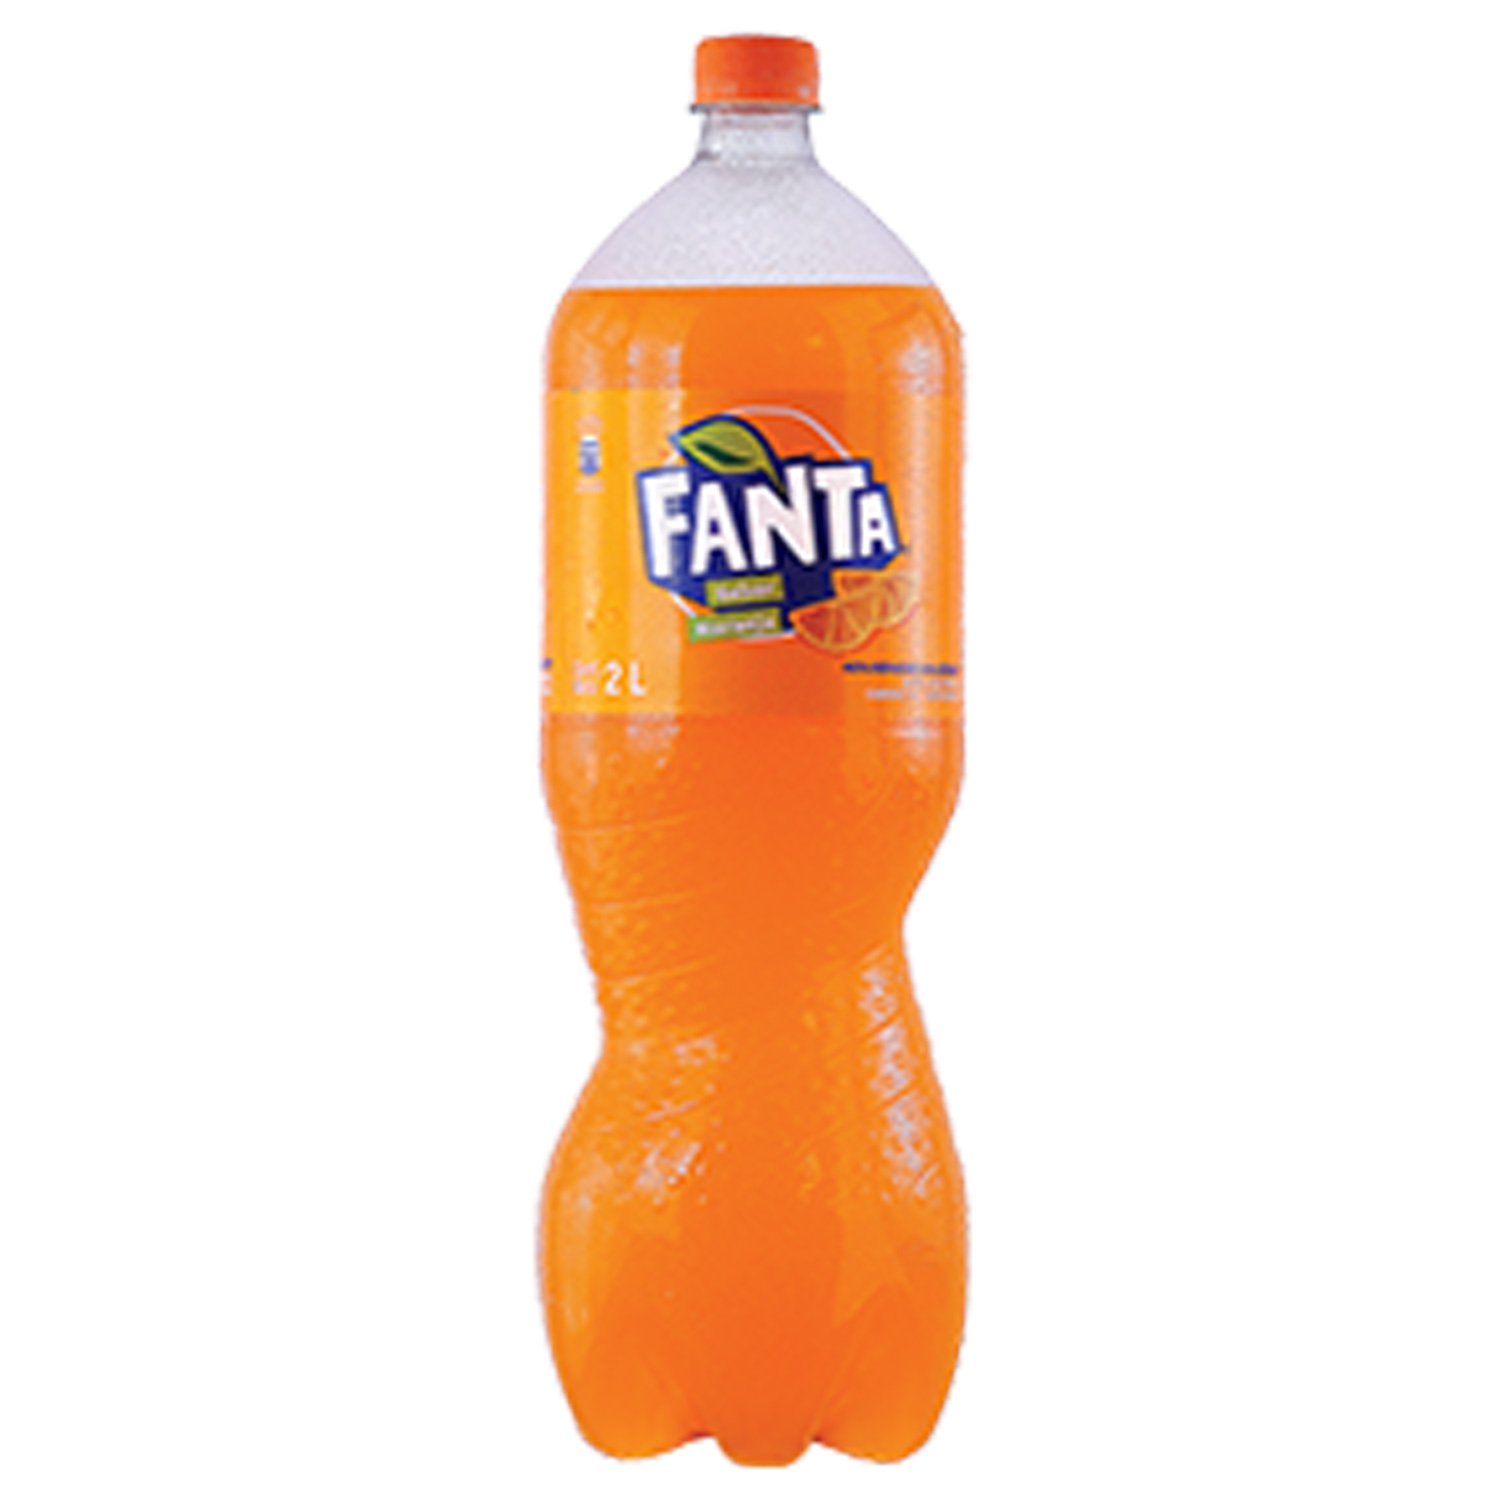 Botella de Fanta Naranja 2L